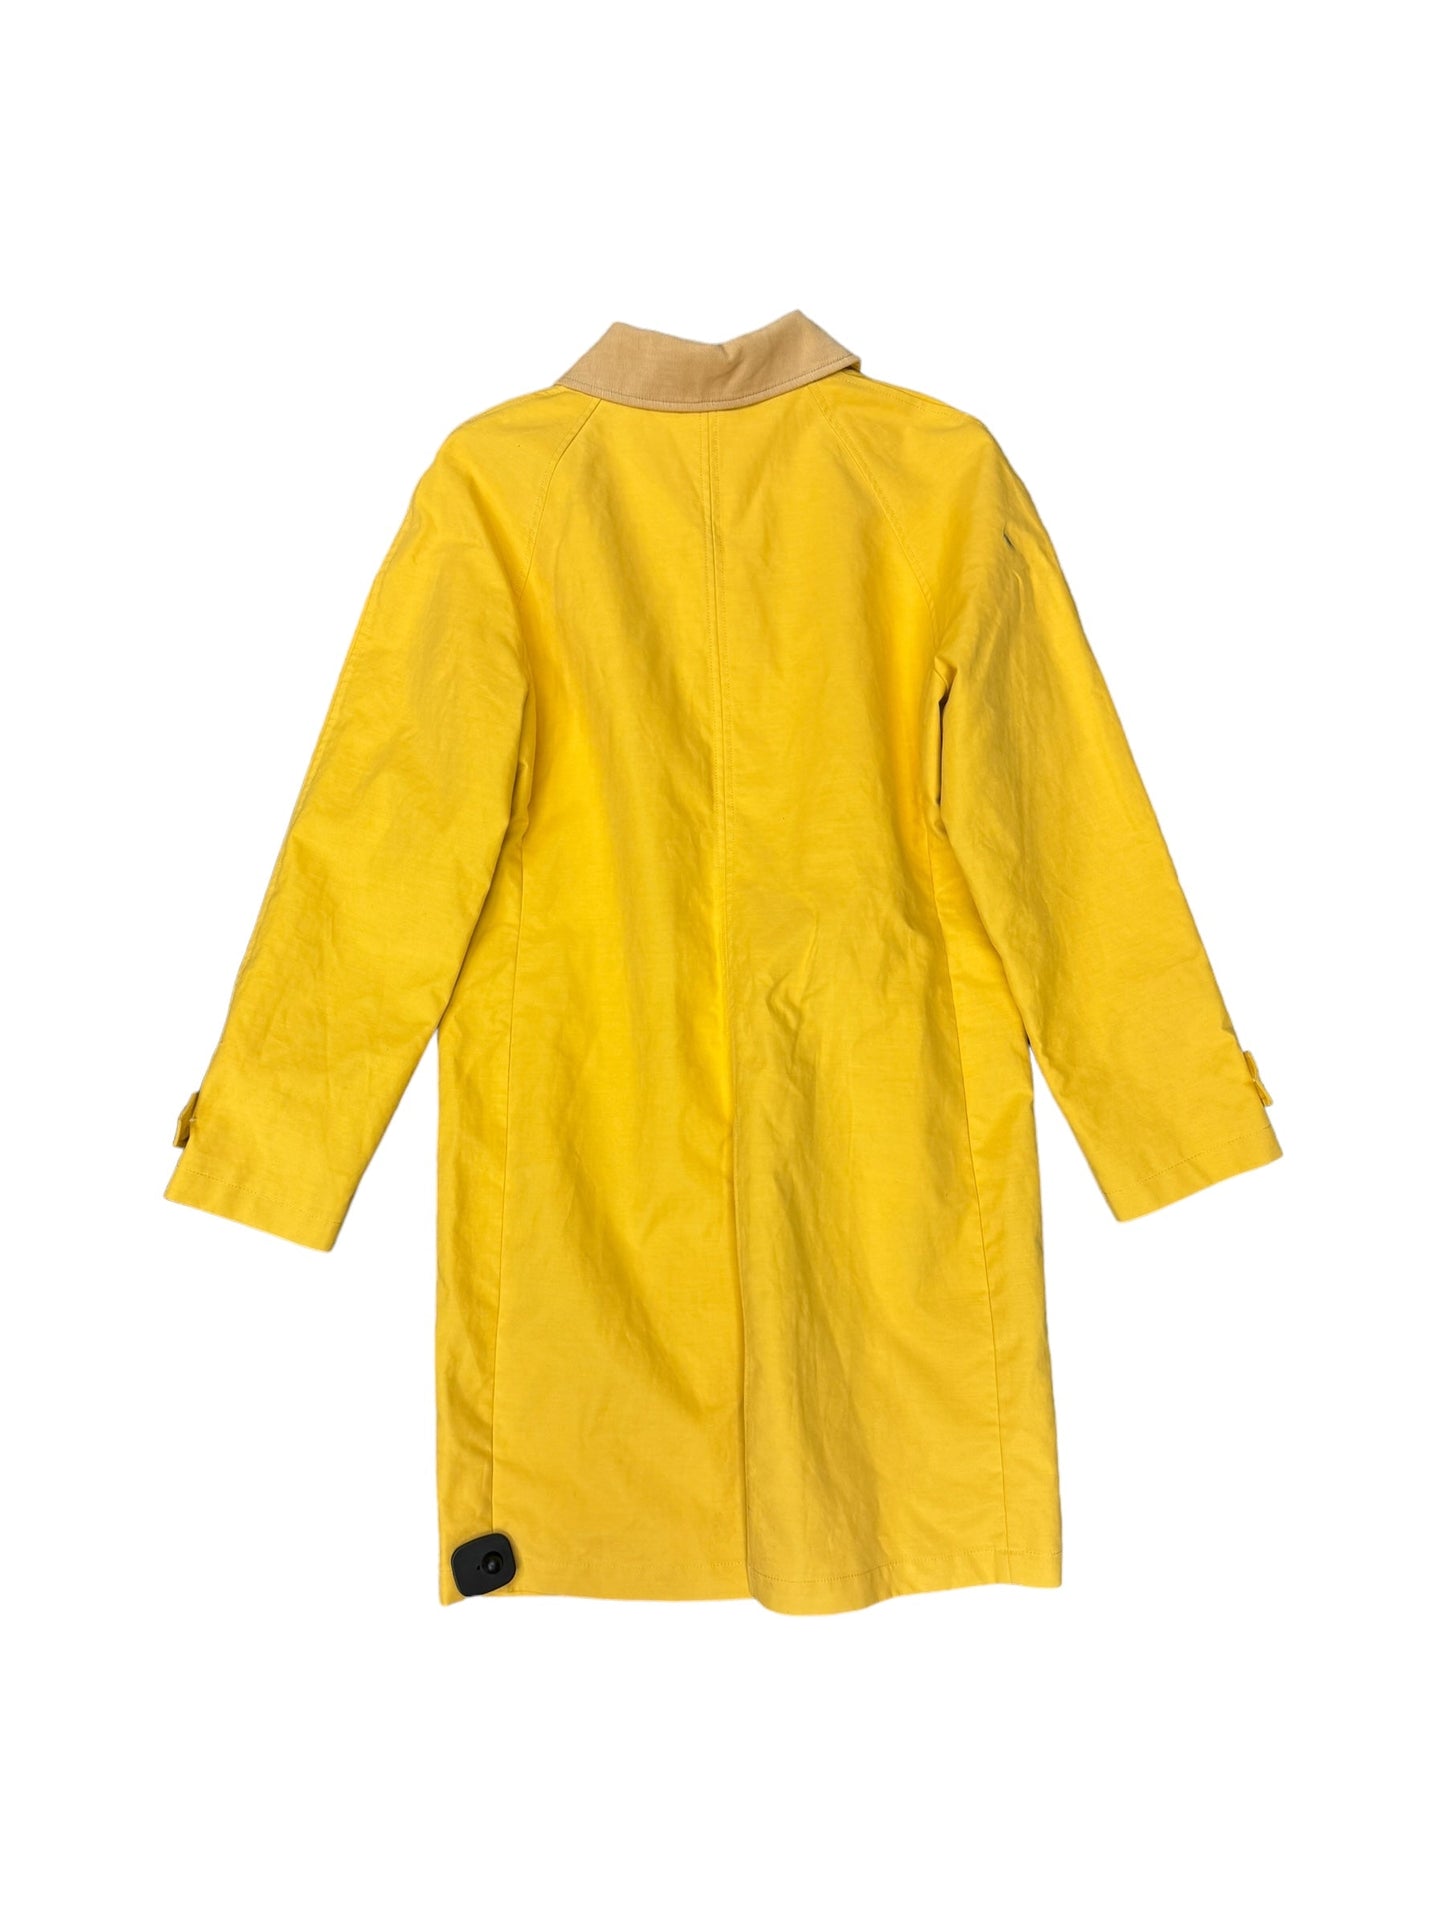 Yellow Jacket Other Target-designer, Size M